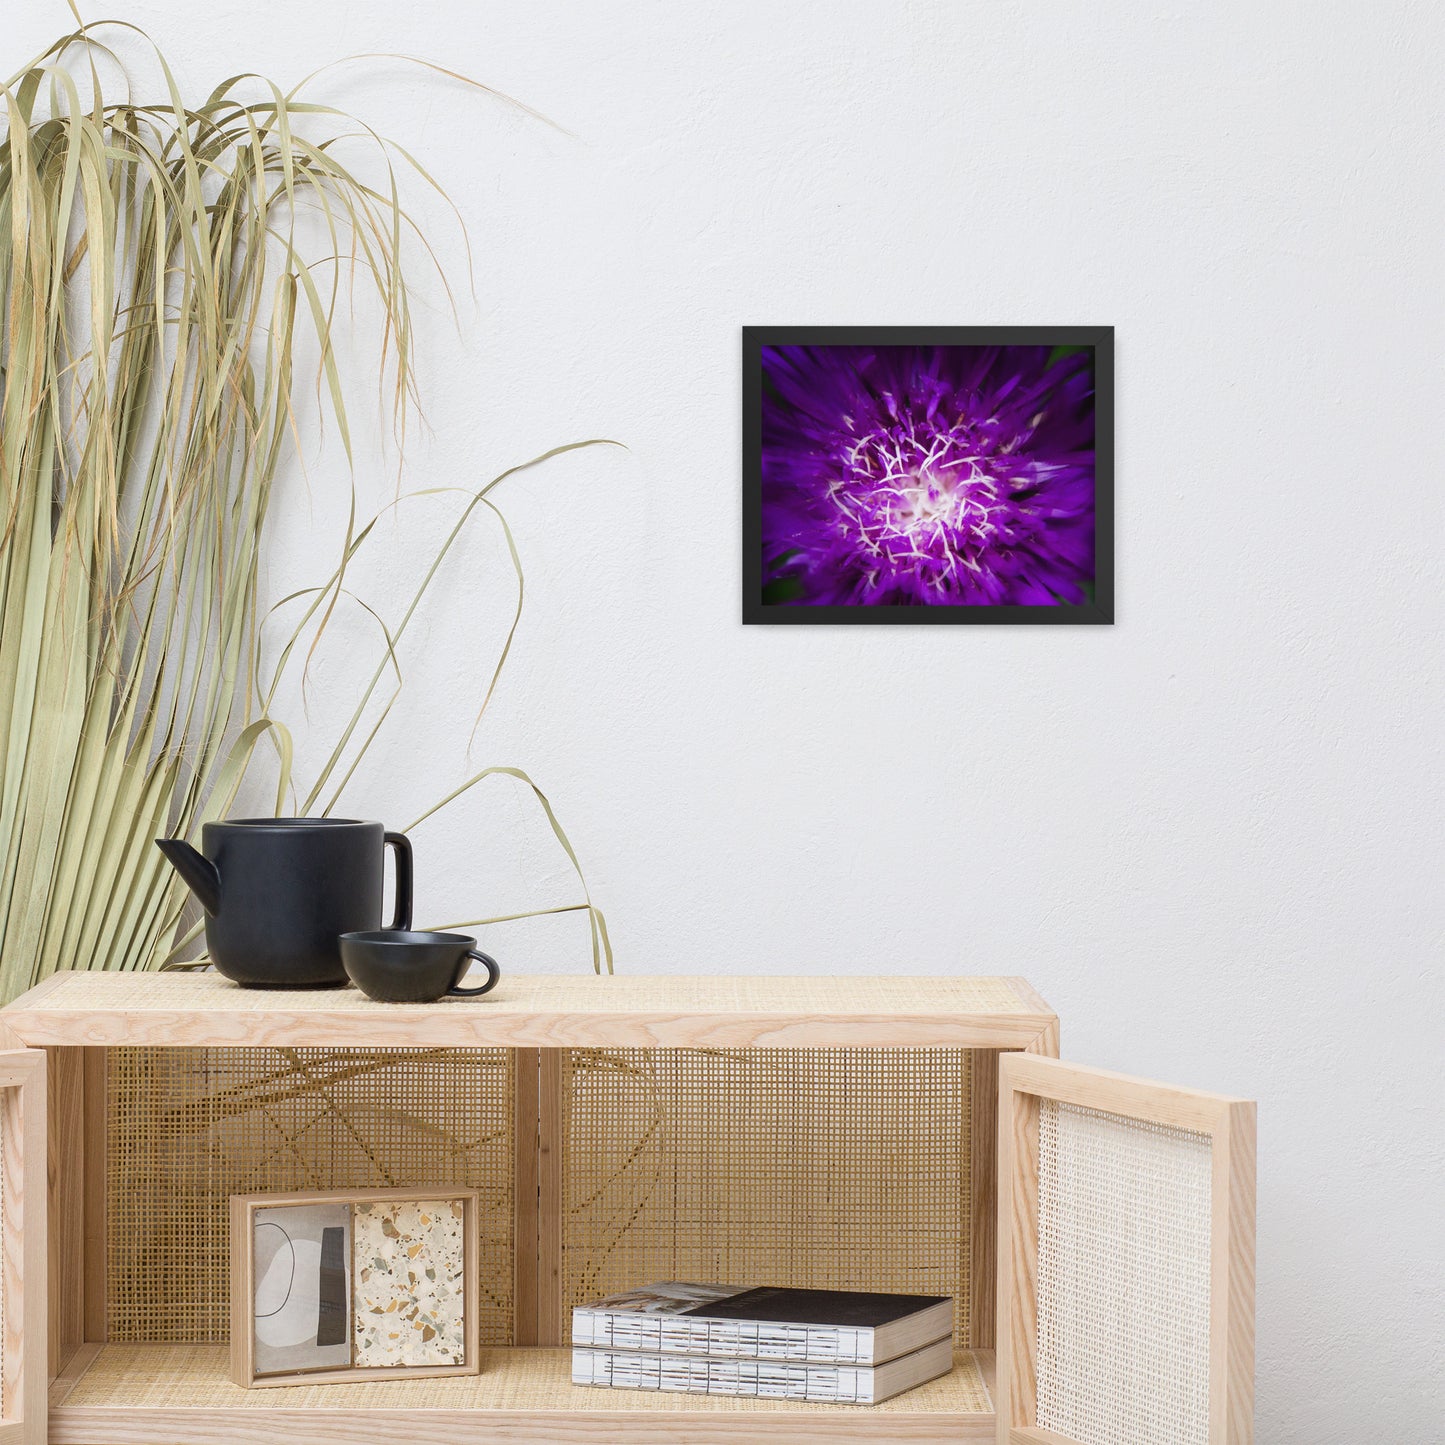 Black Framed Prints For Living Room: Purple Abstract Flower - Botanical / Floral / Flora / Flowers / Nature Photograph Framed Wall Art Print - Artwork - Wall Decor